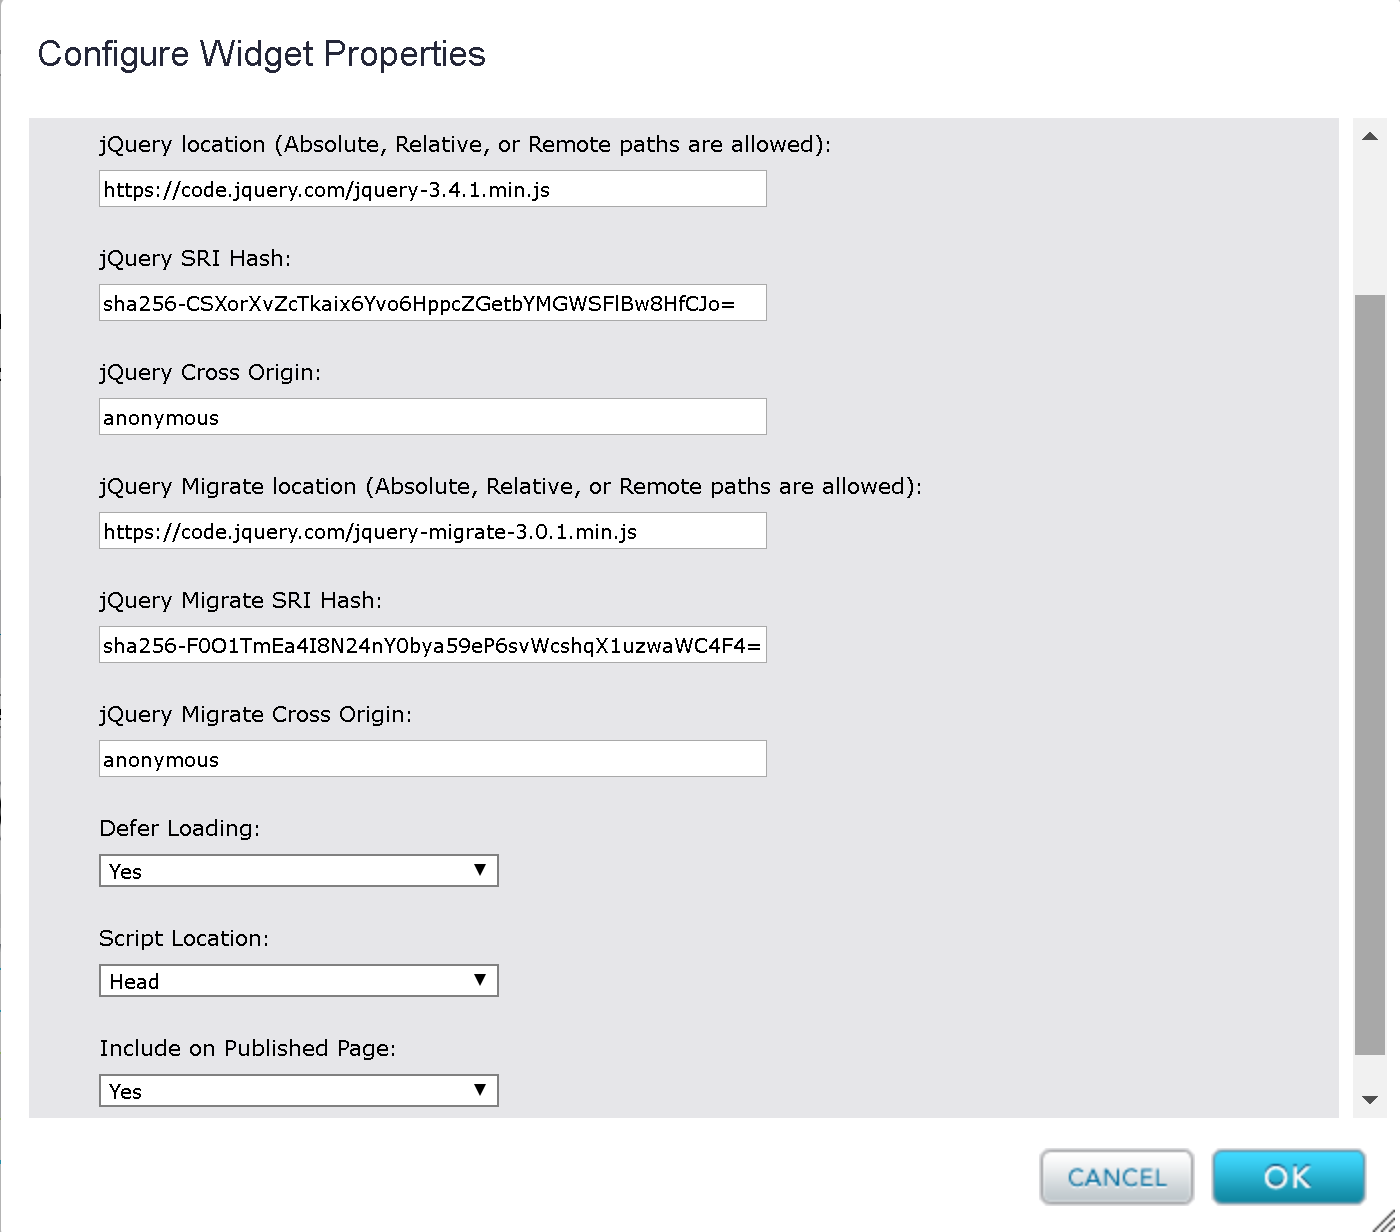 Screen shot of jQuery Widget Layout Properties